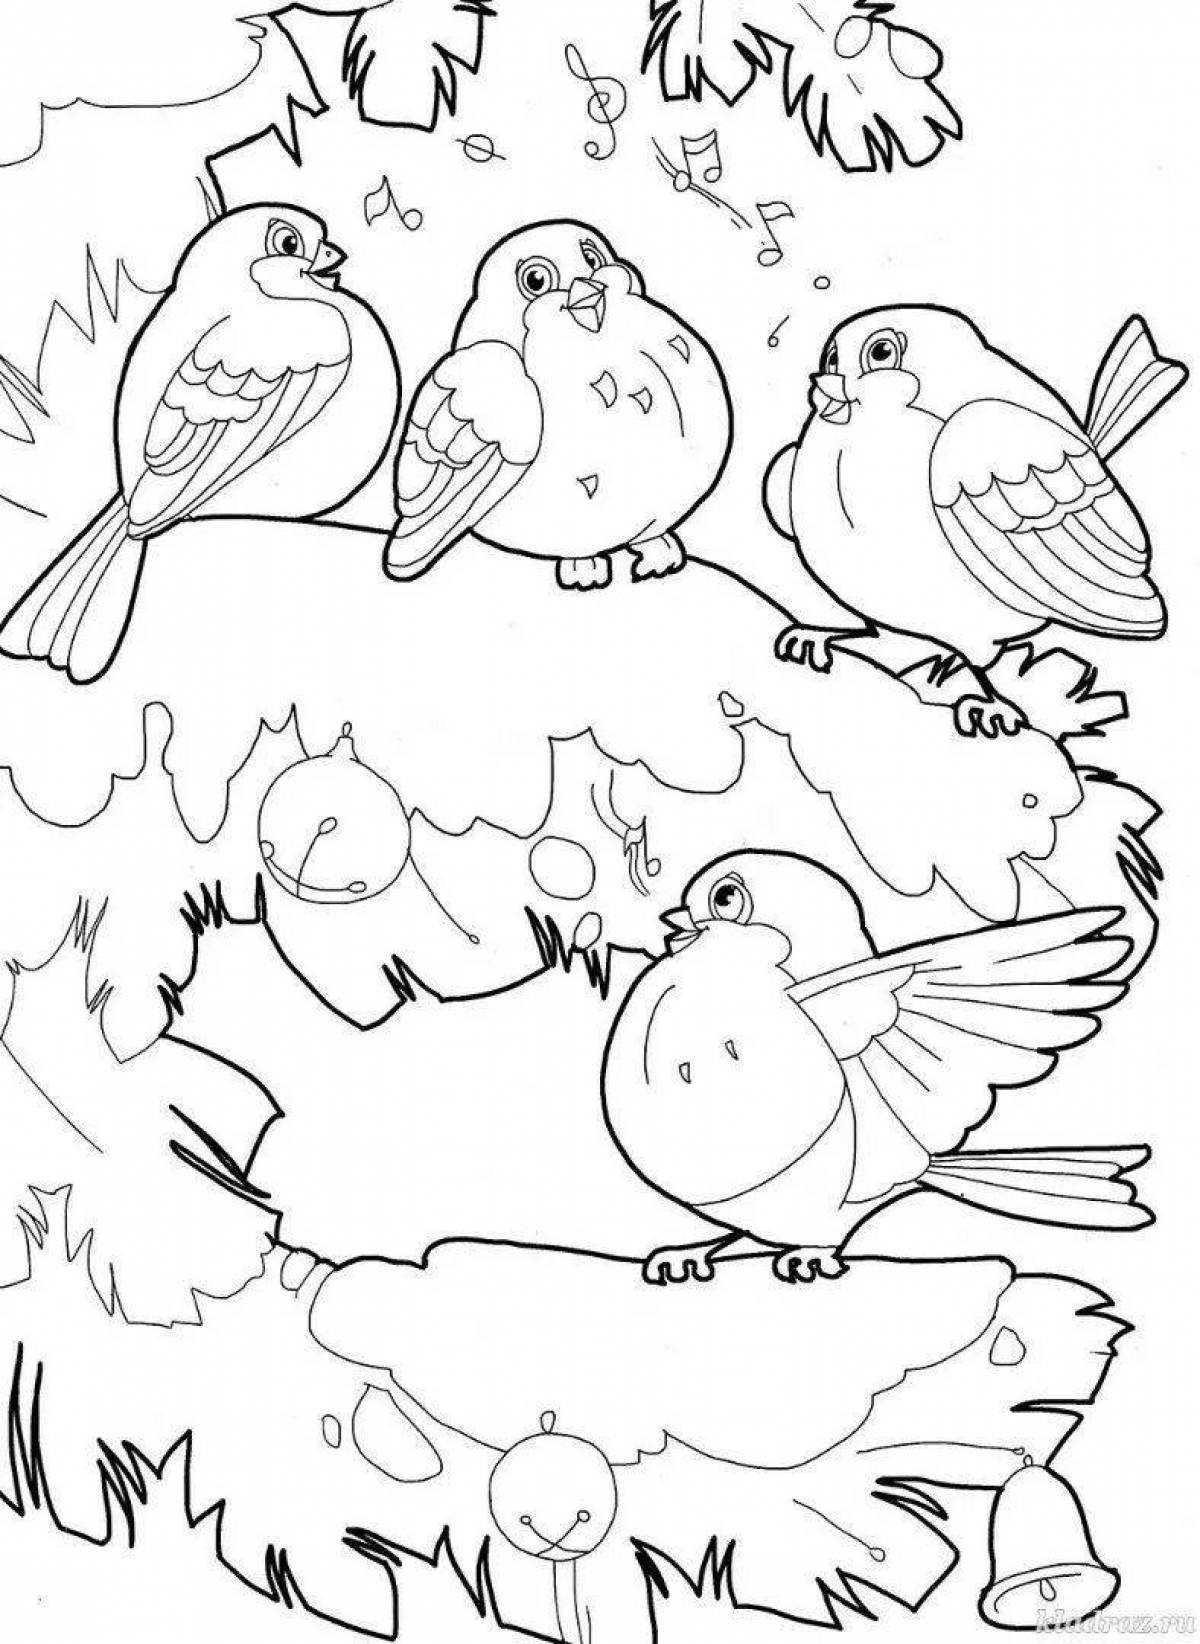 Funny bullfinch children's coloring book